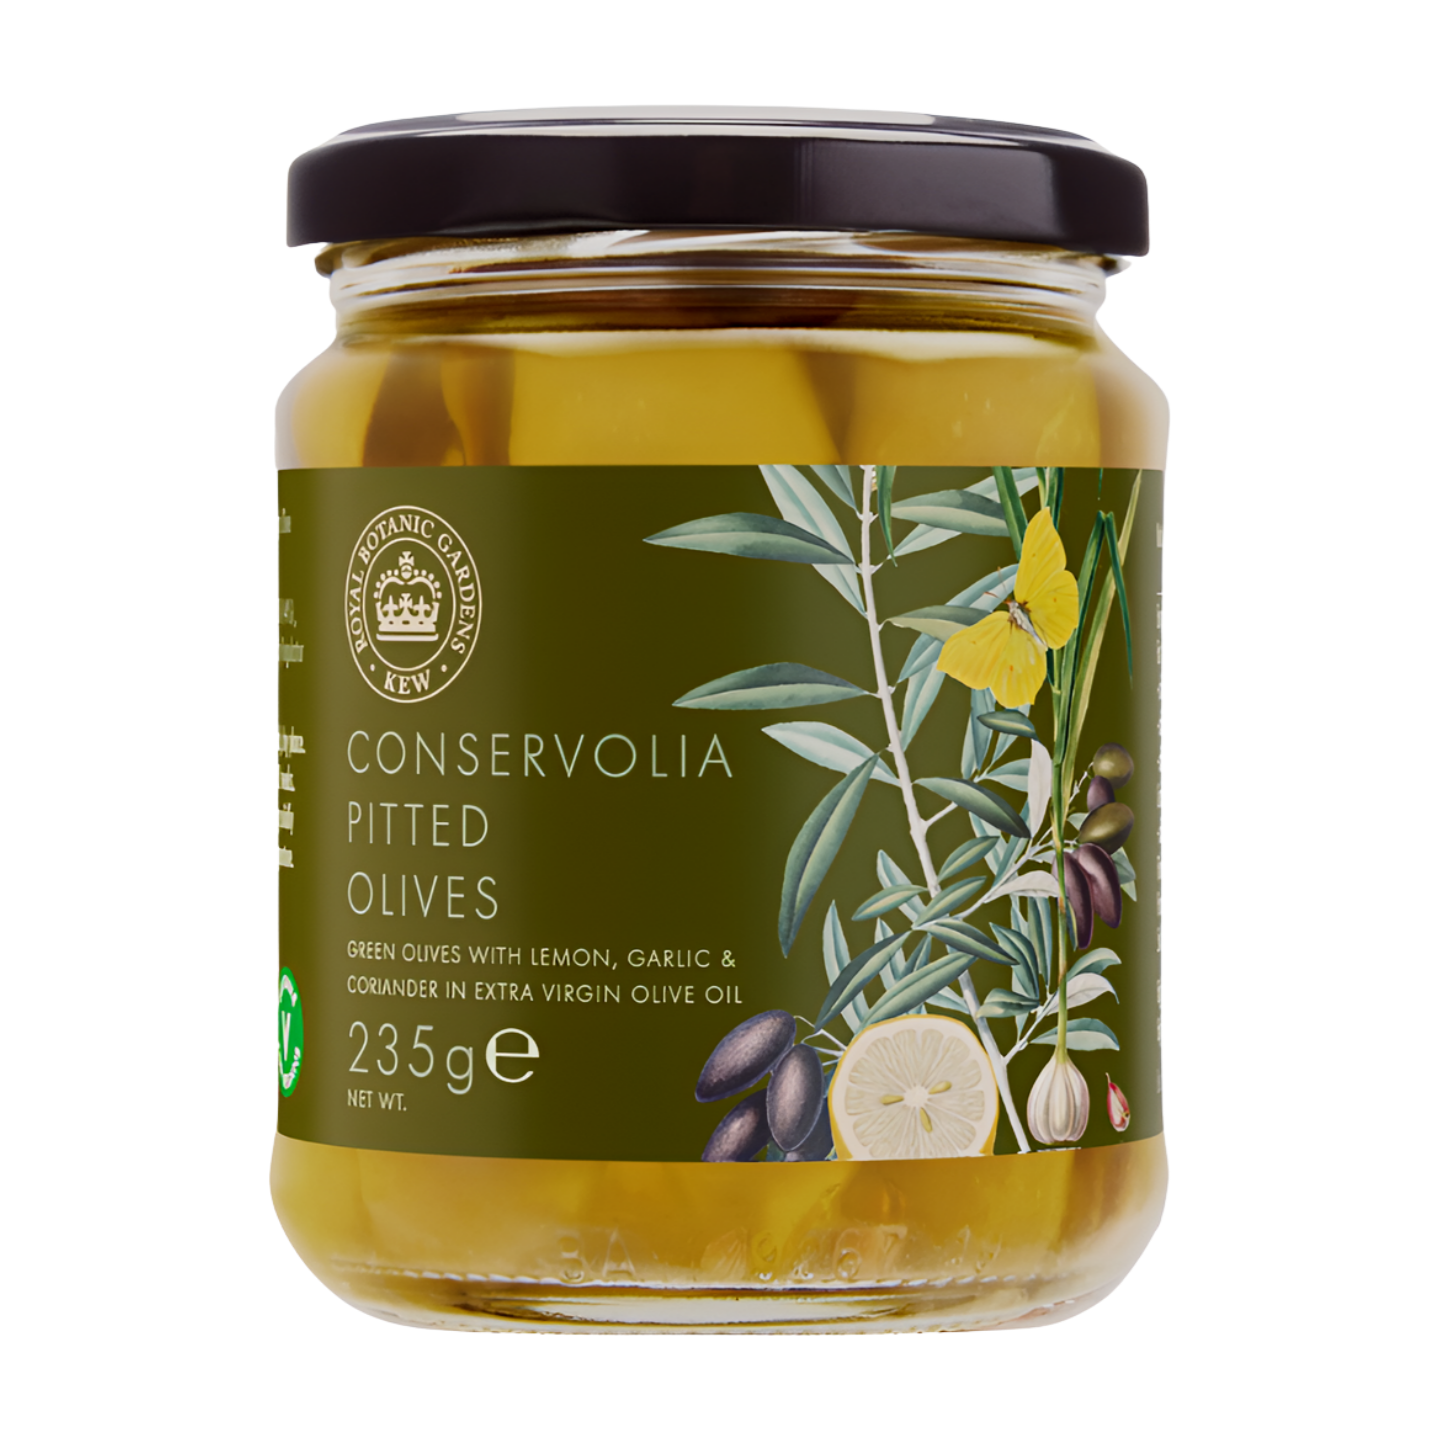 RBG Kew Pitted Conservolia Olives with Lemon & Garlic (6x245g)